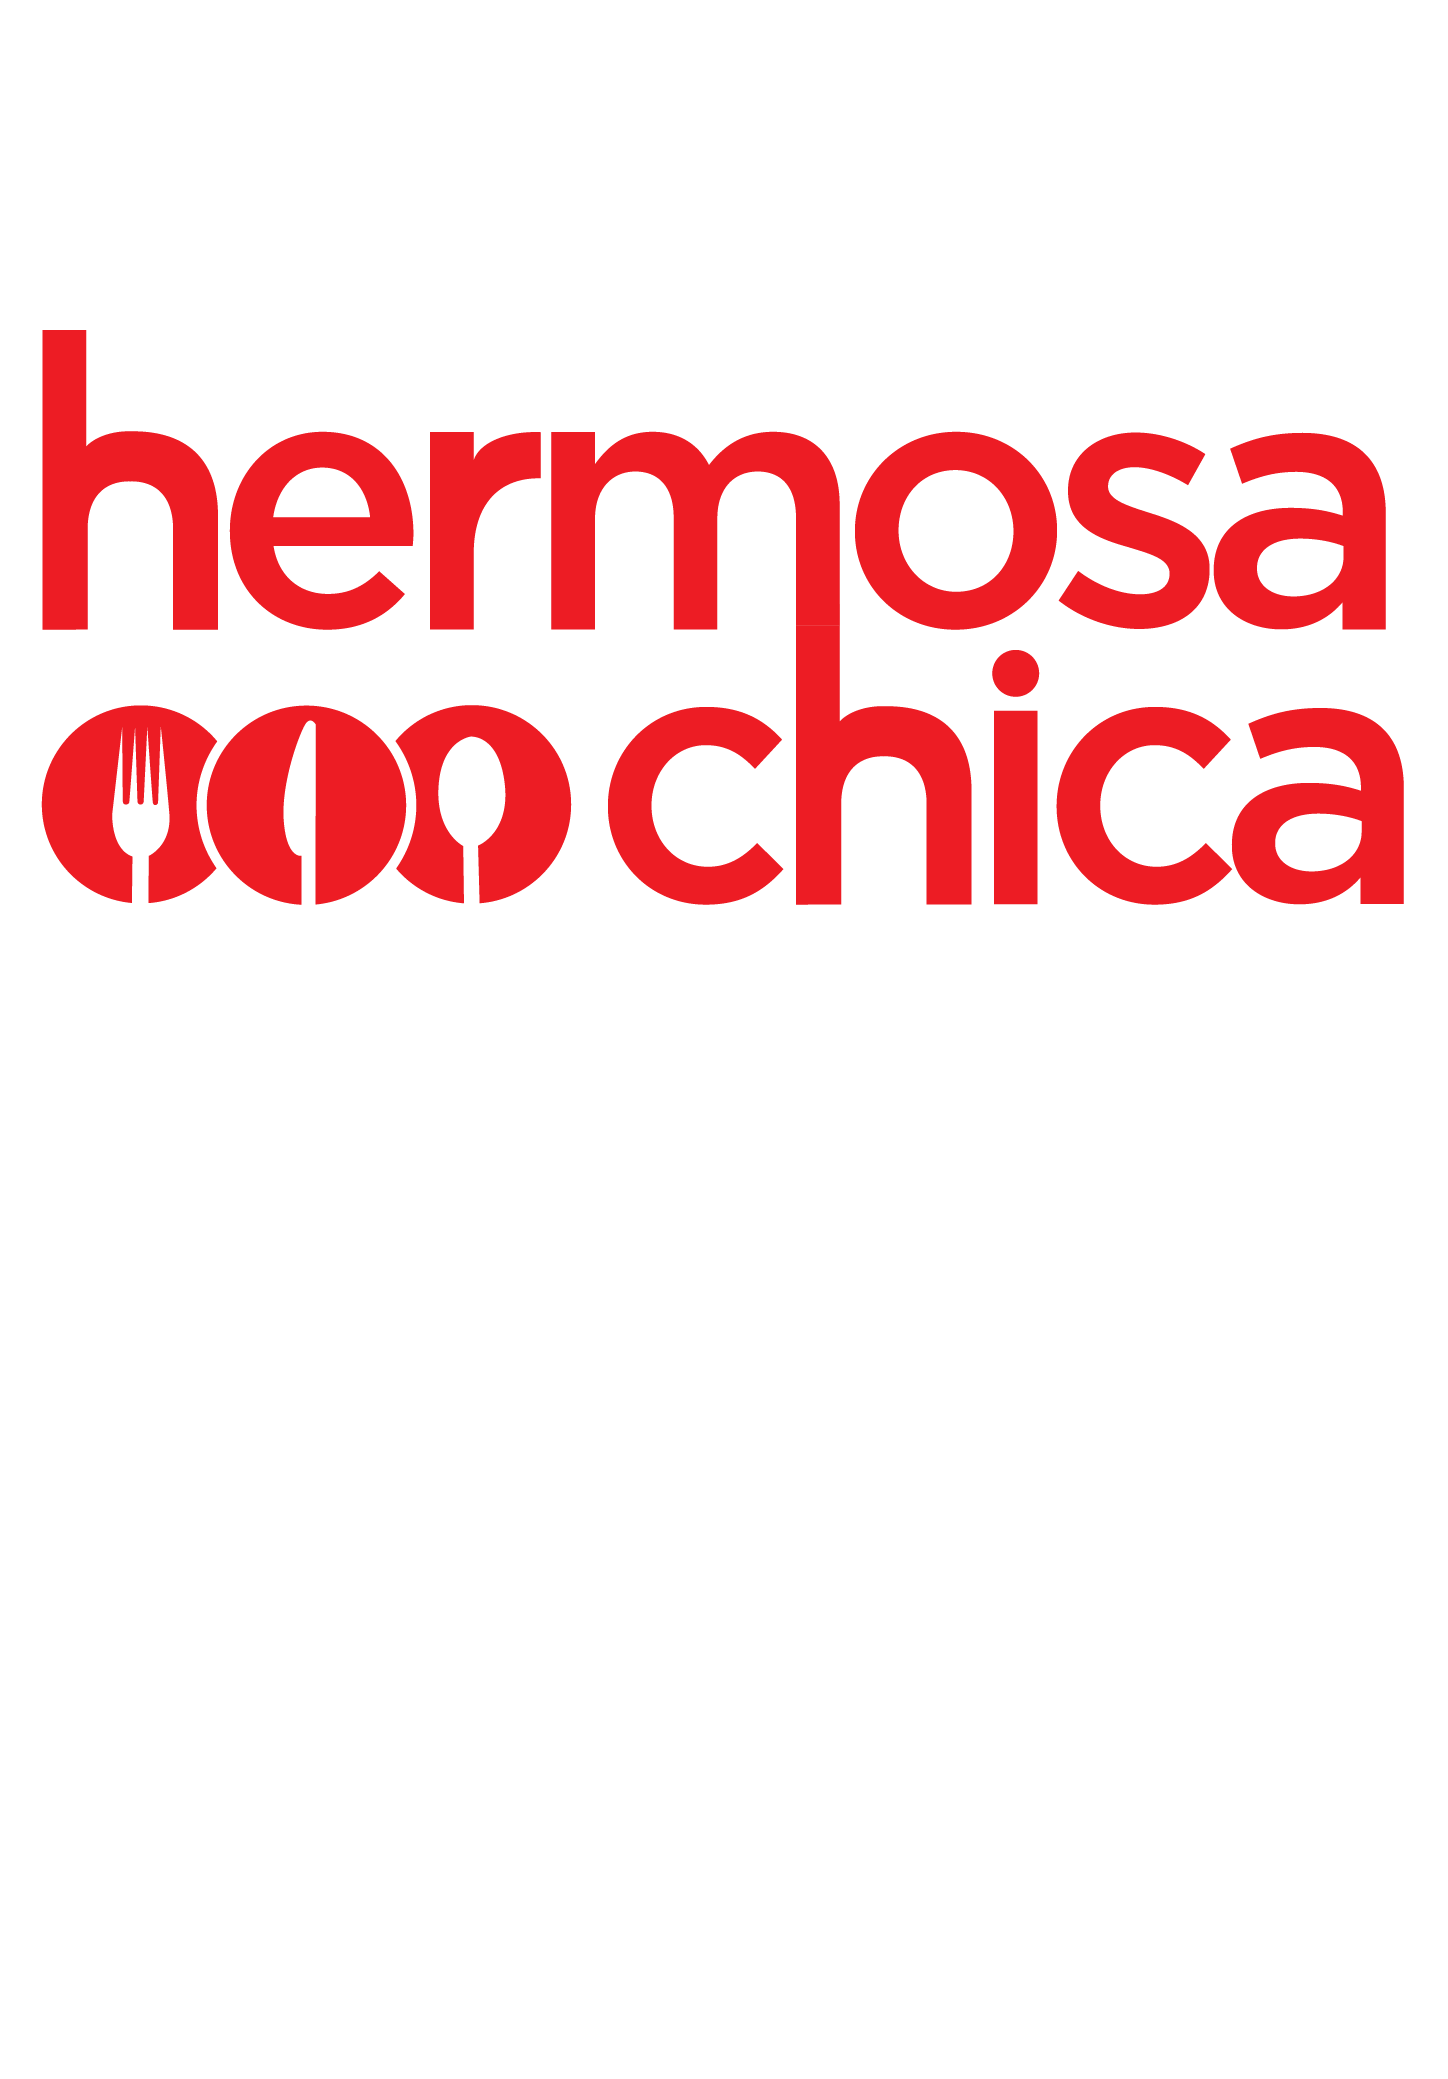 HERMOSA LOGO- final fro web-02